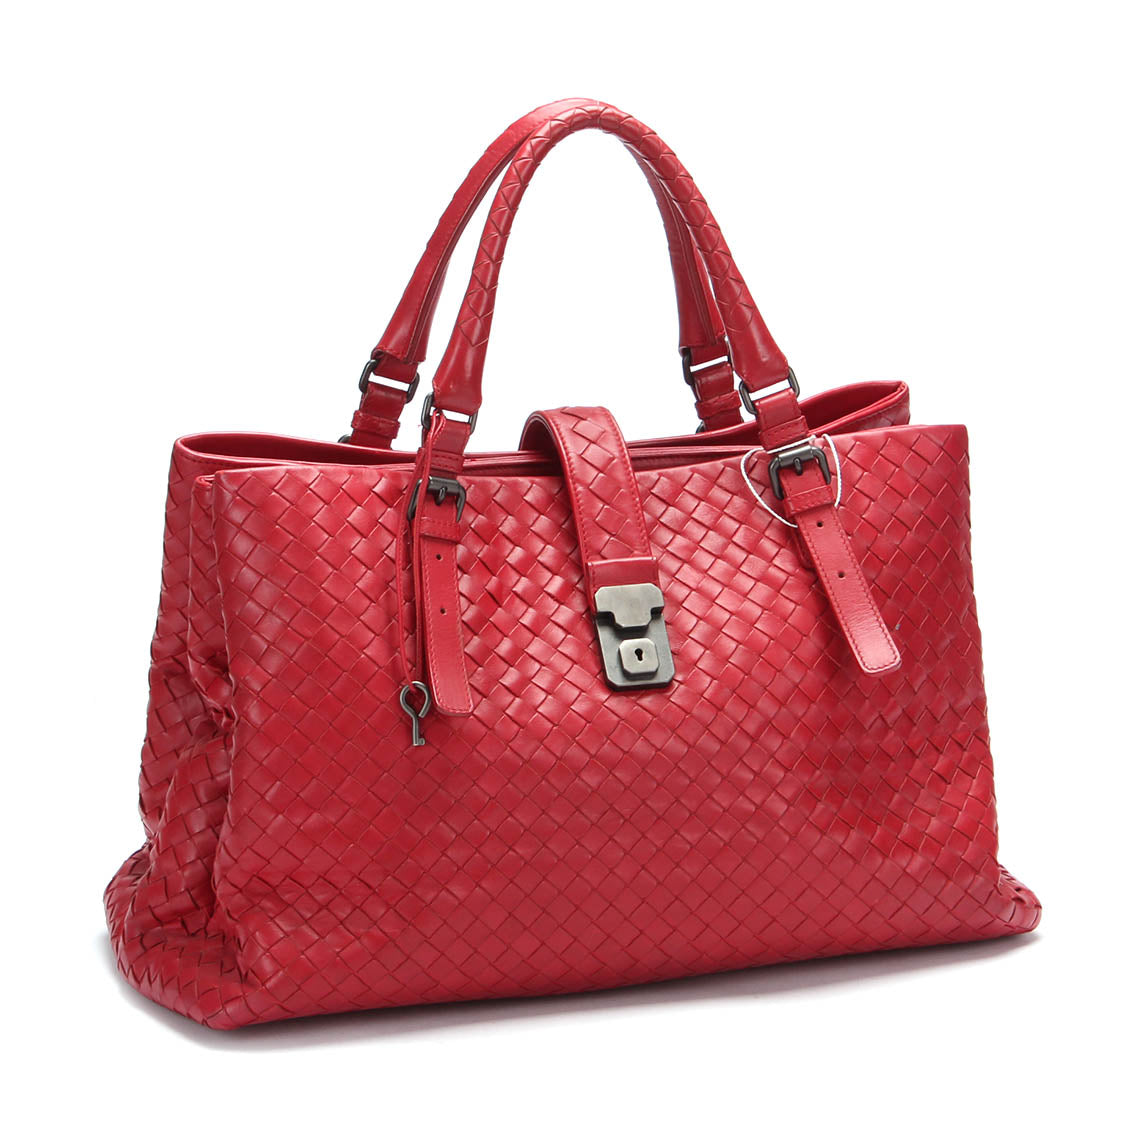 Bottega Veneta Intrecciato Leather Roma Handbag Leather Handbag in Good condition